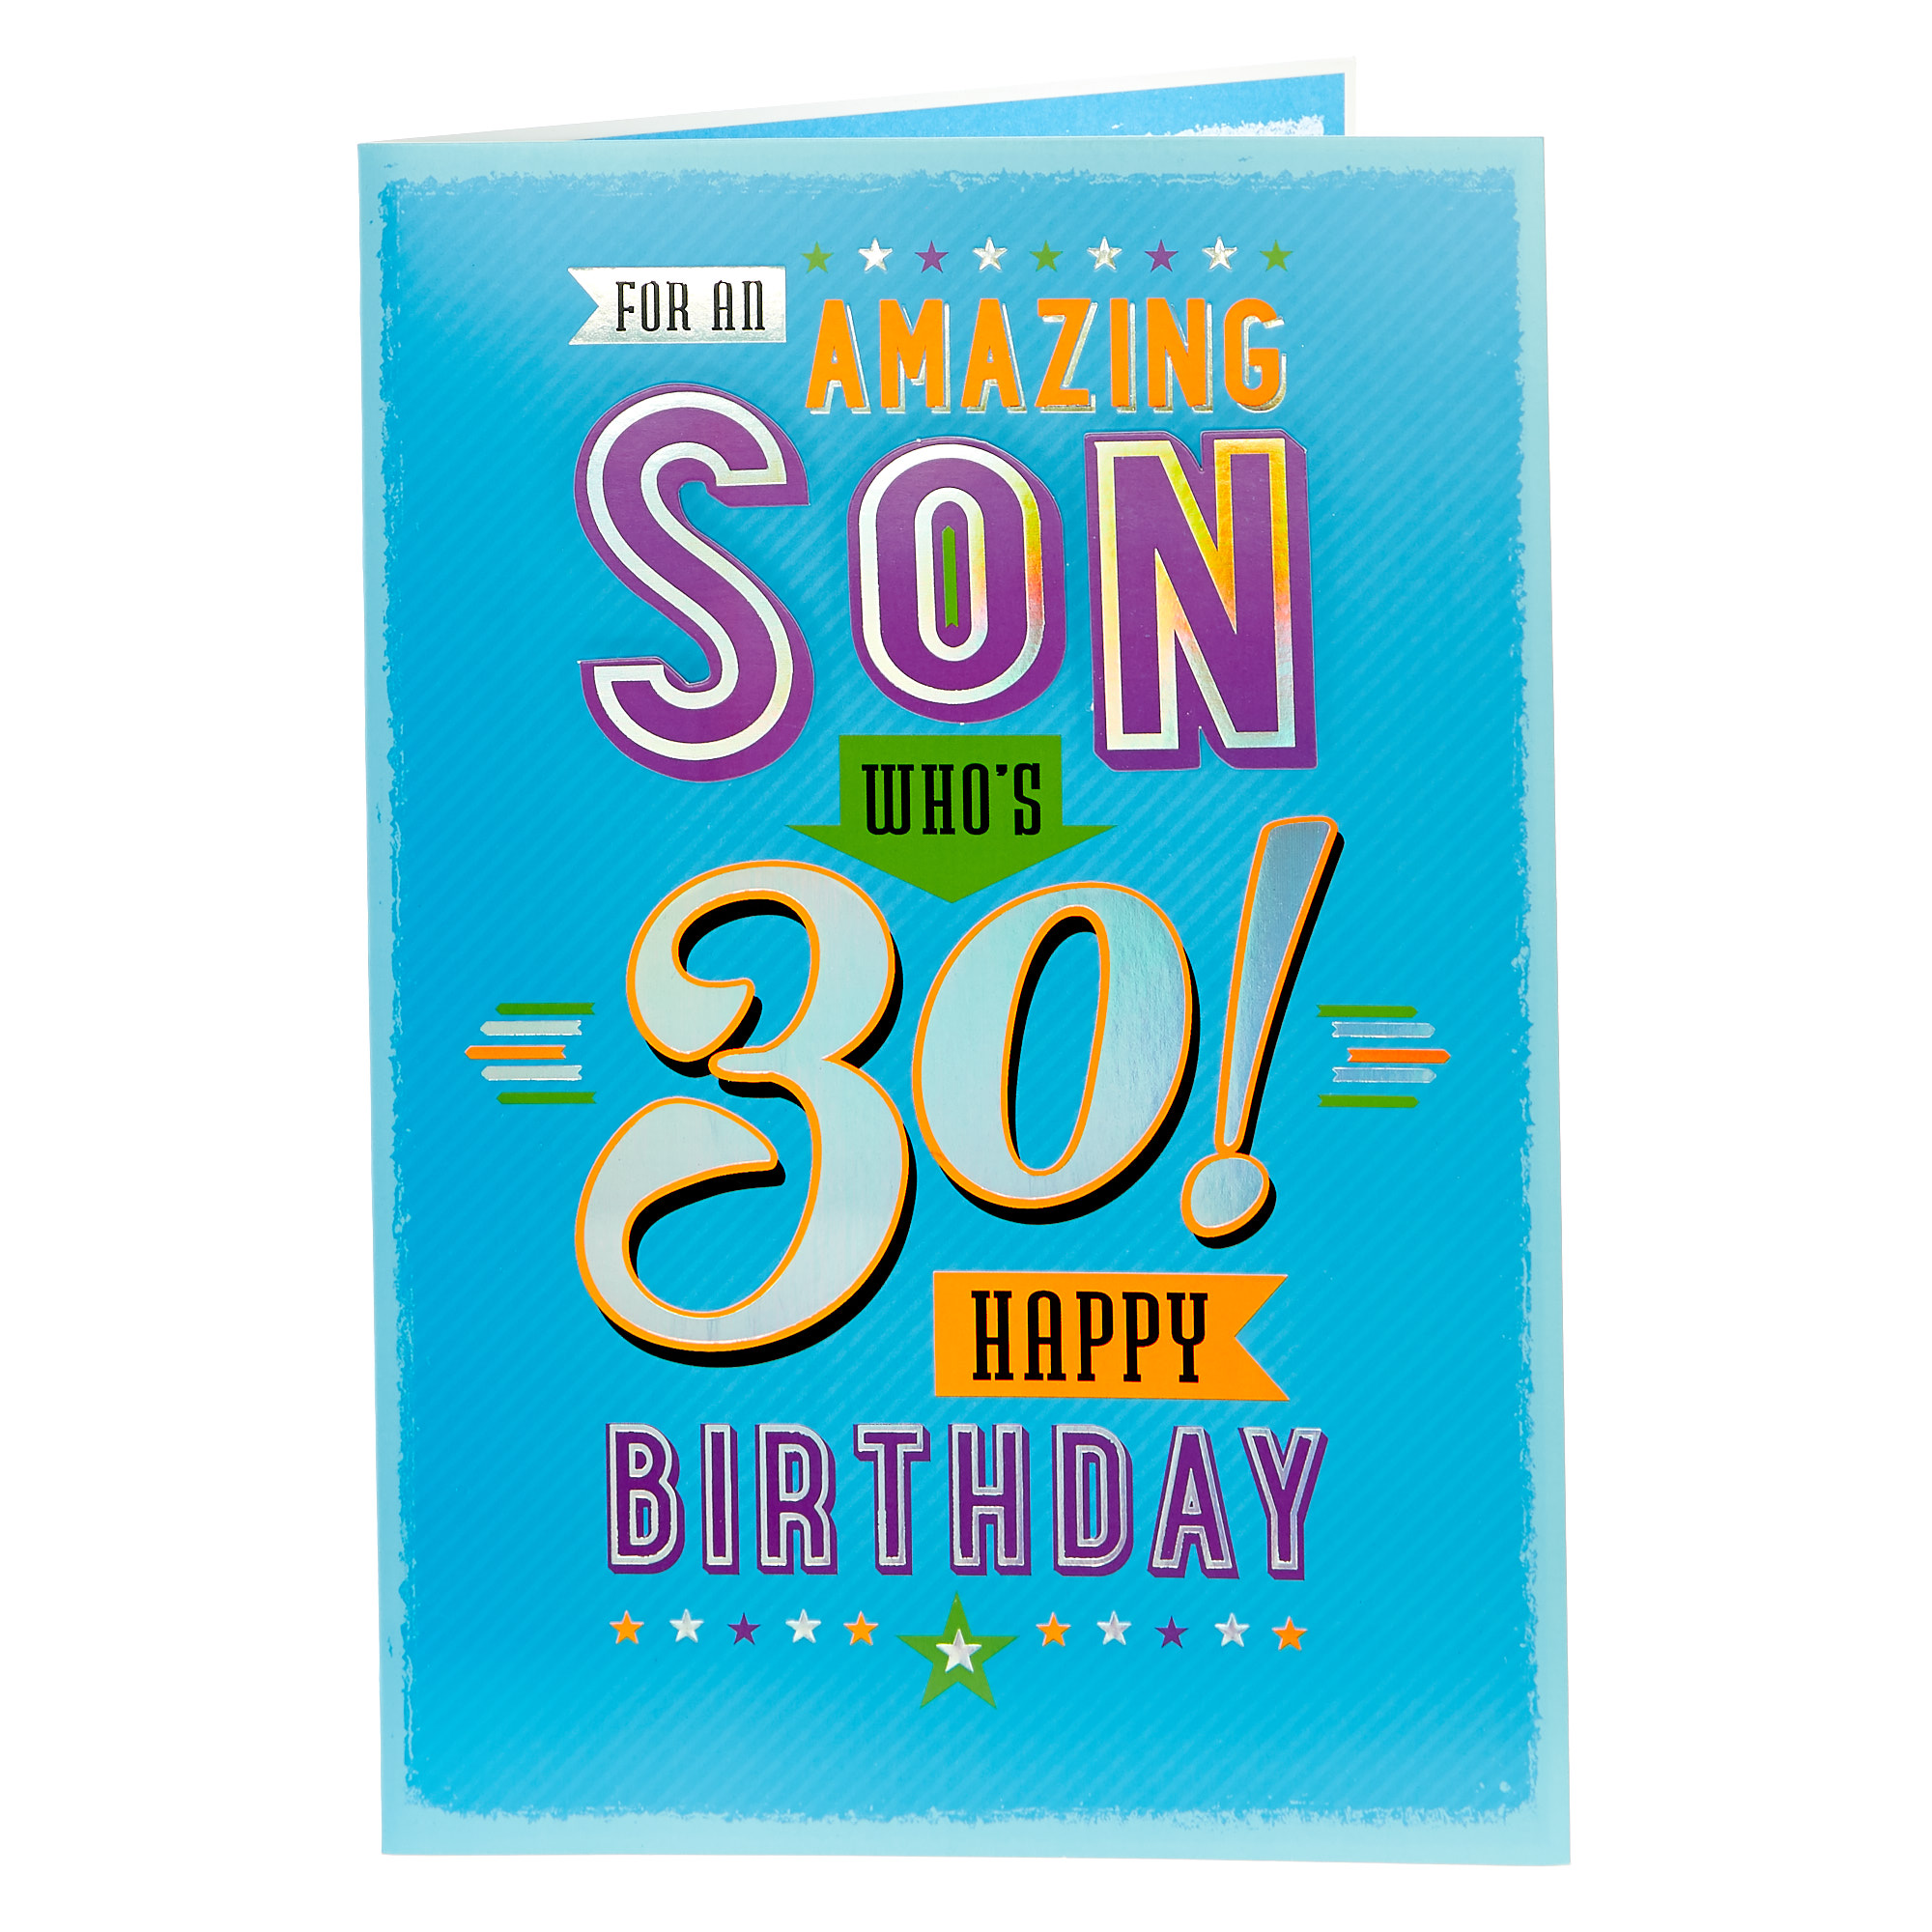 30th Birthday Card - Amazing Son